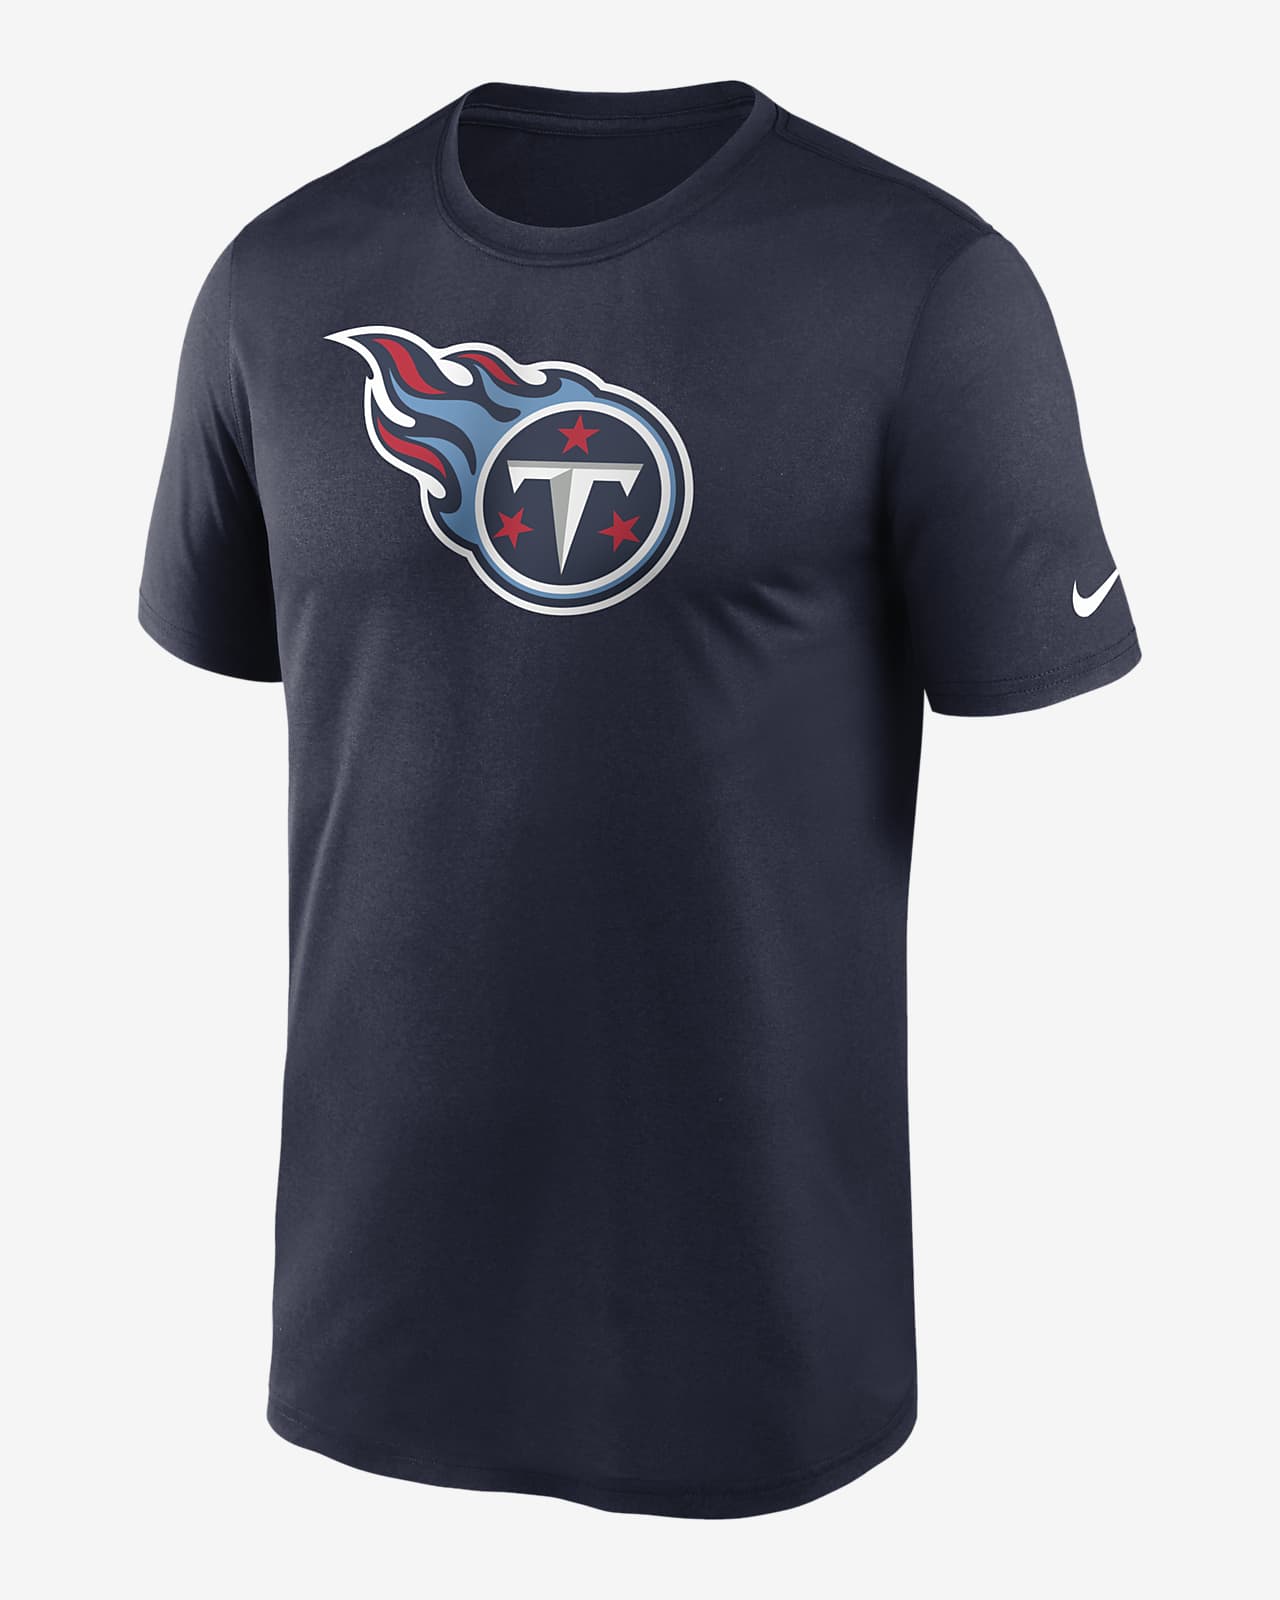 Playera para hombre Nike Dri-FIT Logo Legend (NFL Tennessee Titans)